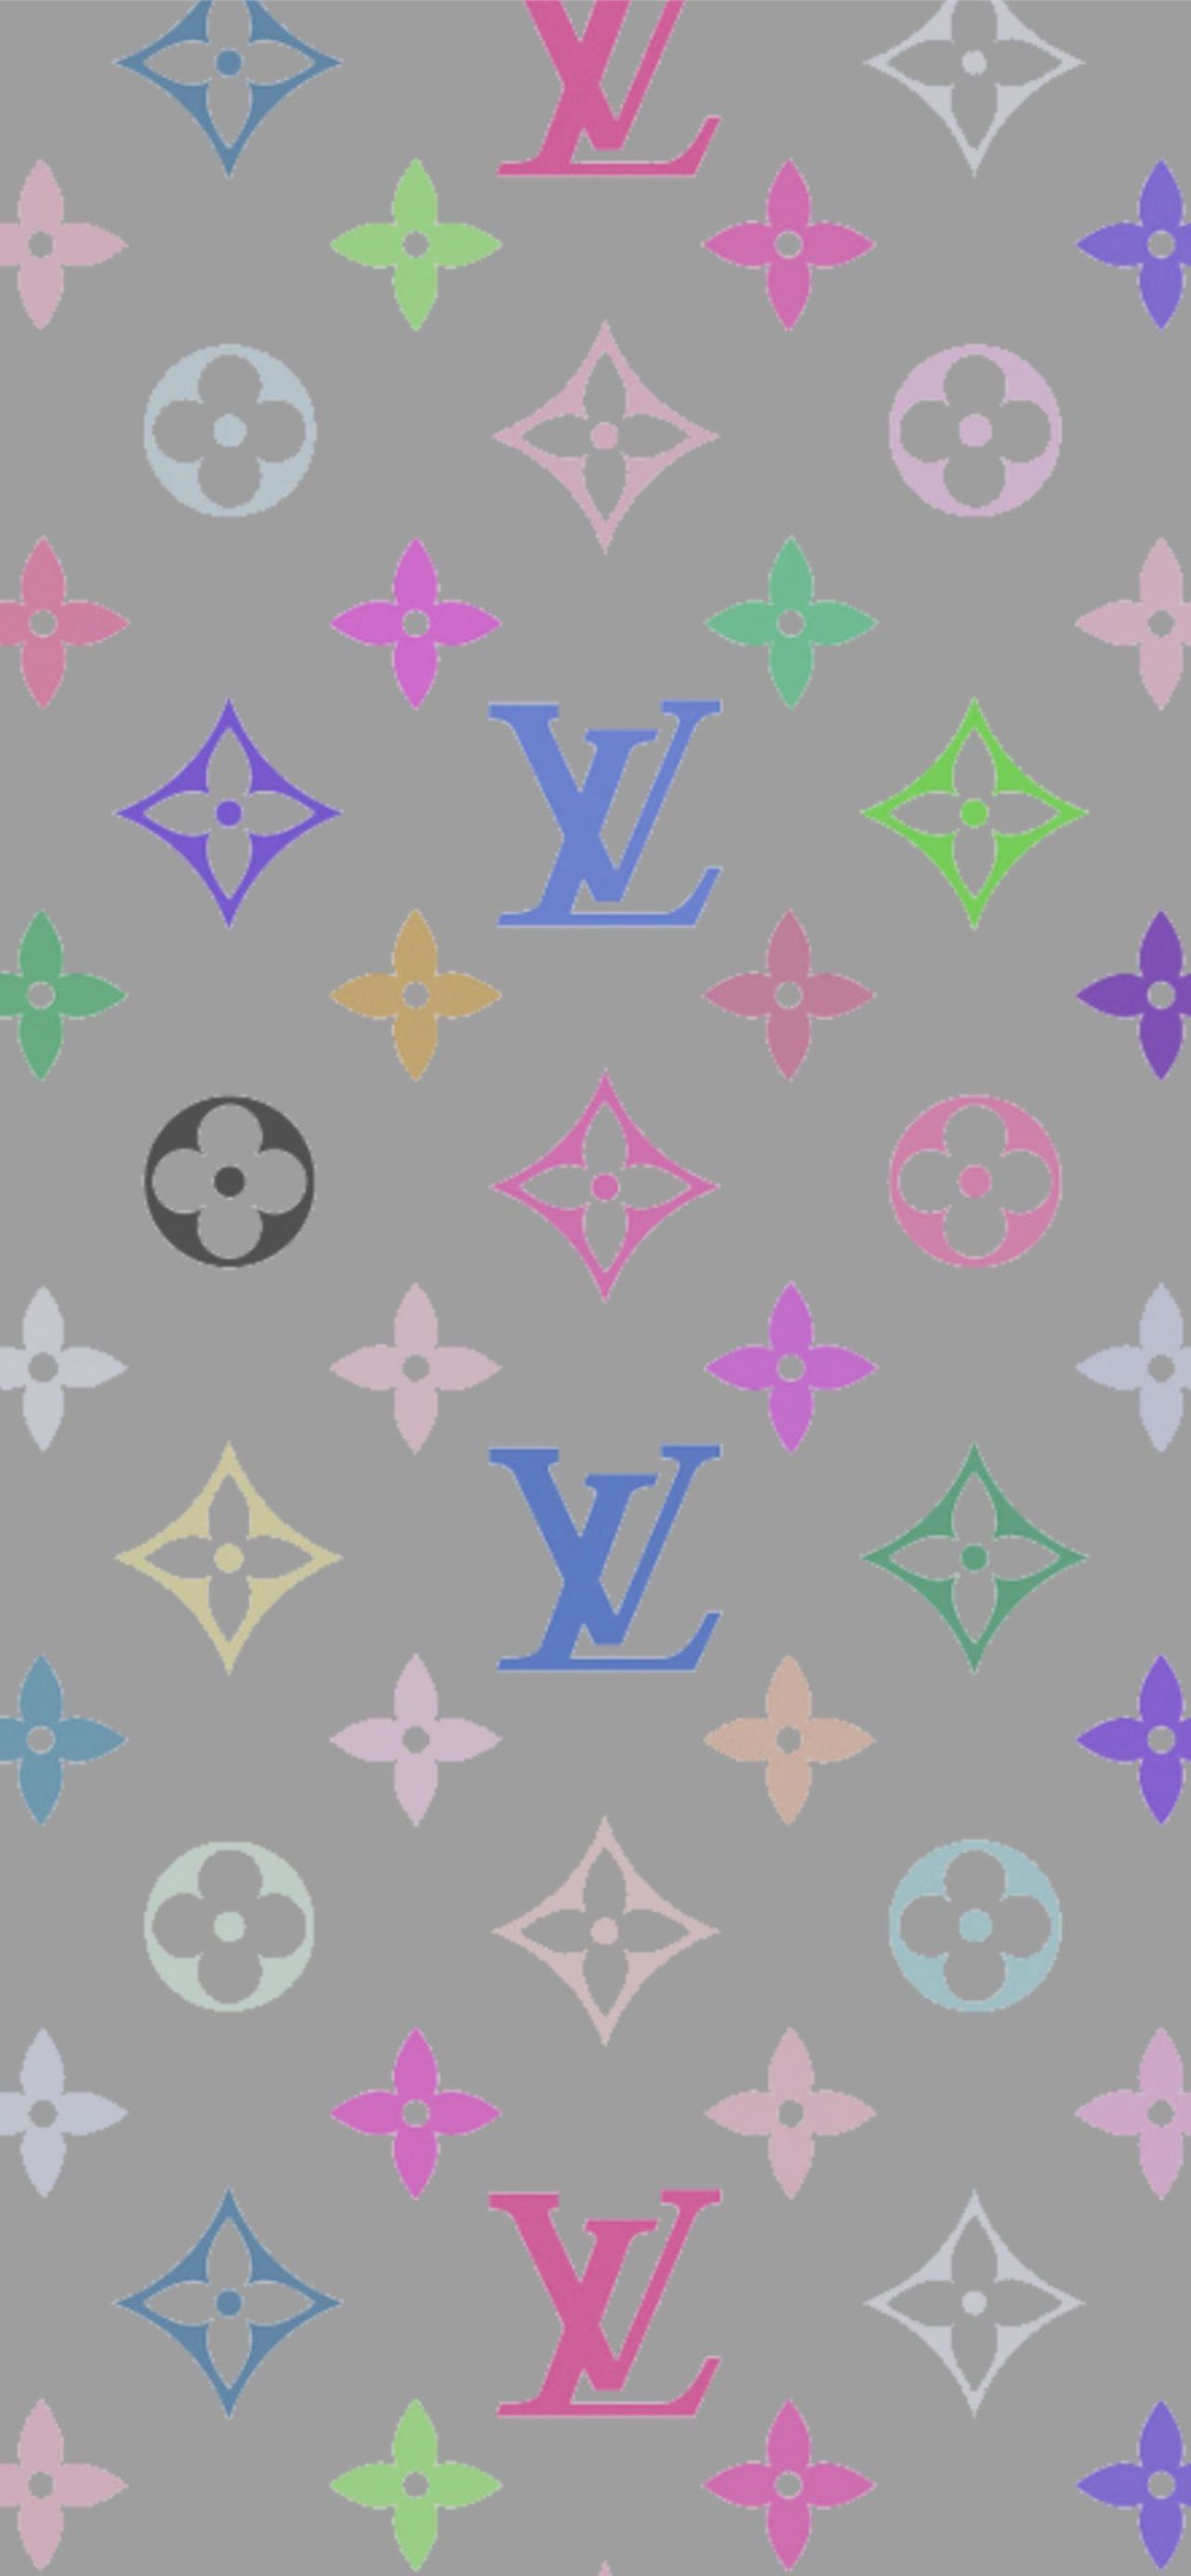 Louis vuitton pattern on a grey background - Louis Vuitton